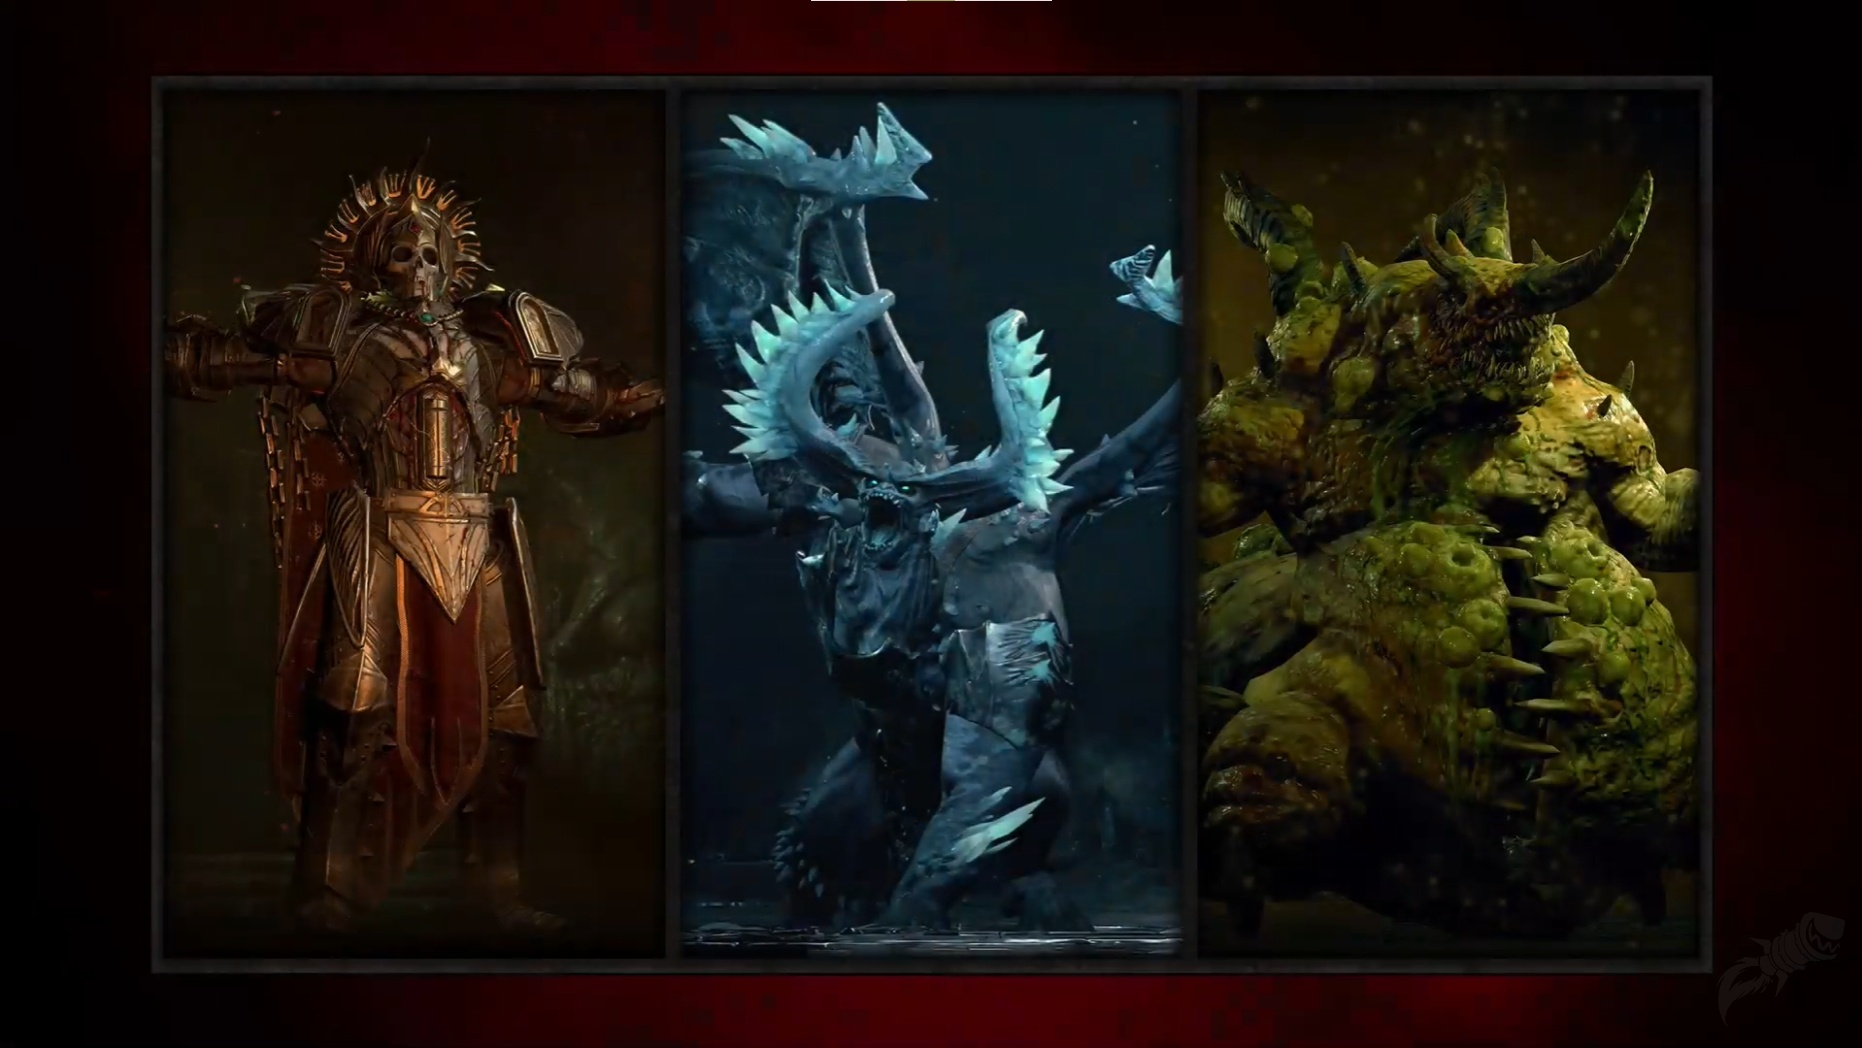 Season 2 Will Include 5 New Endgame Boss Encounters - Diablo 4 - Wowhead  News